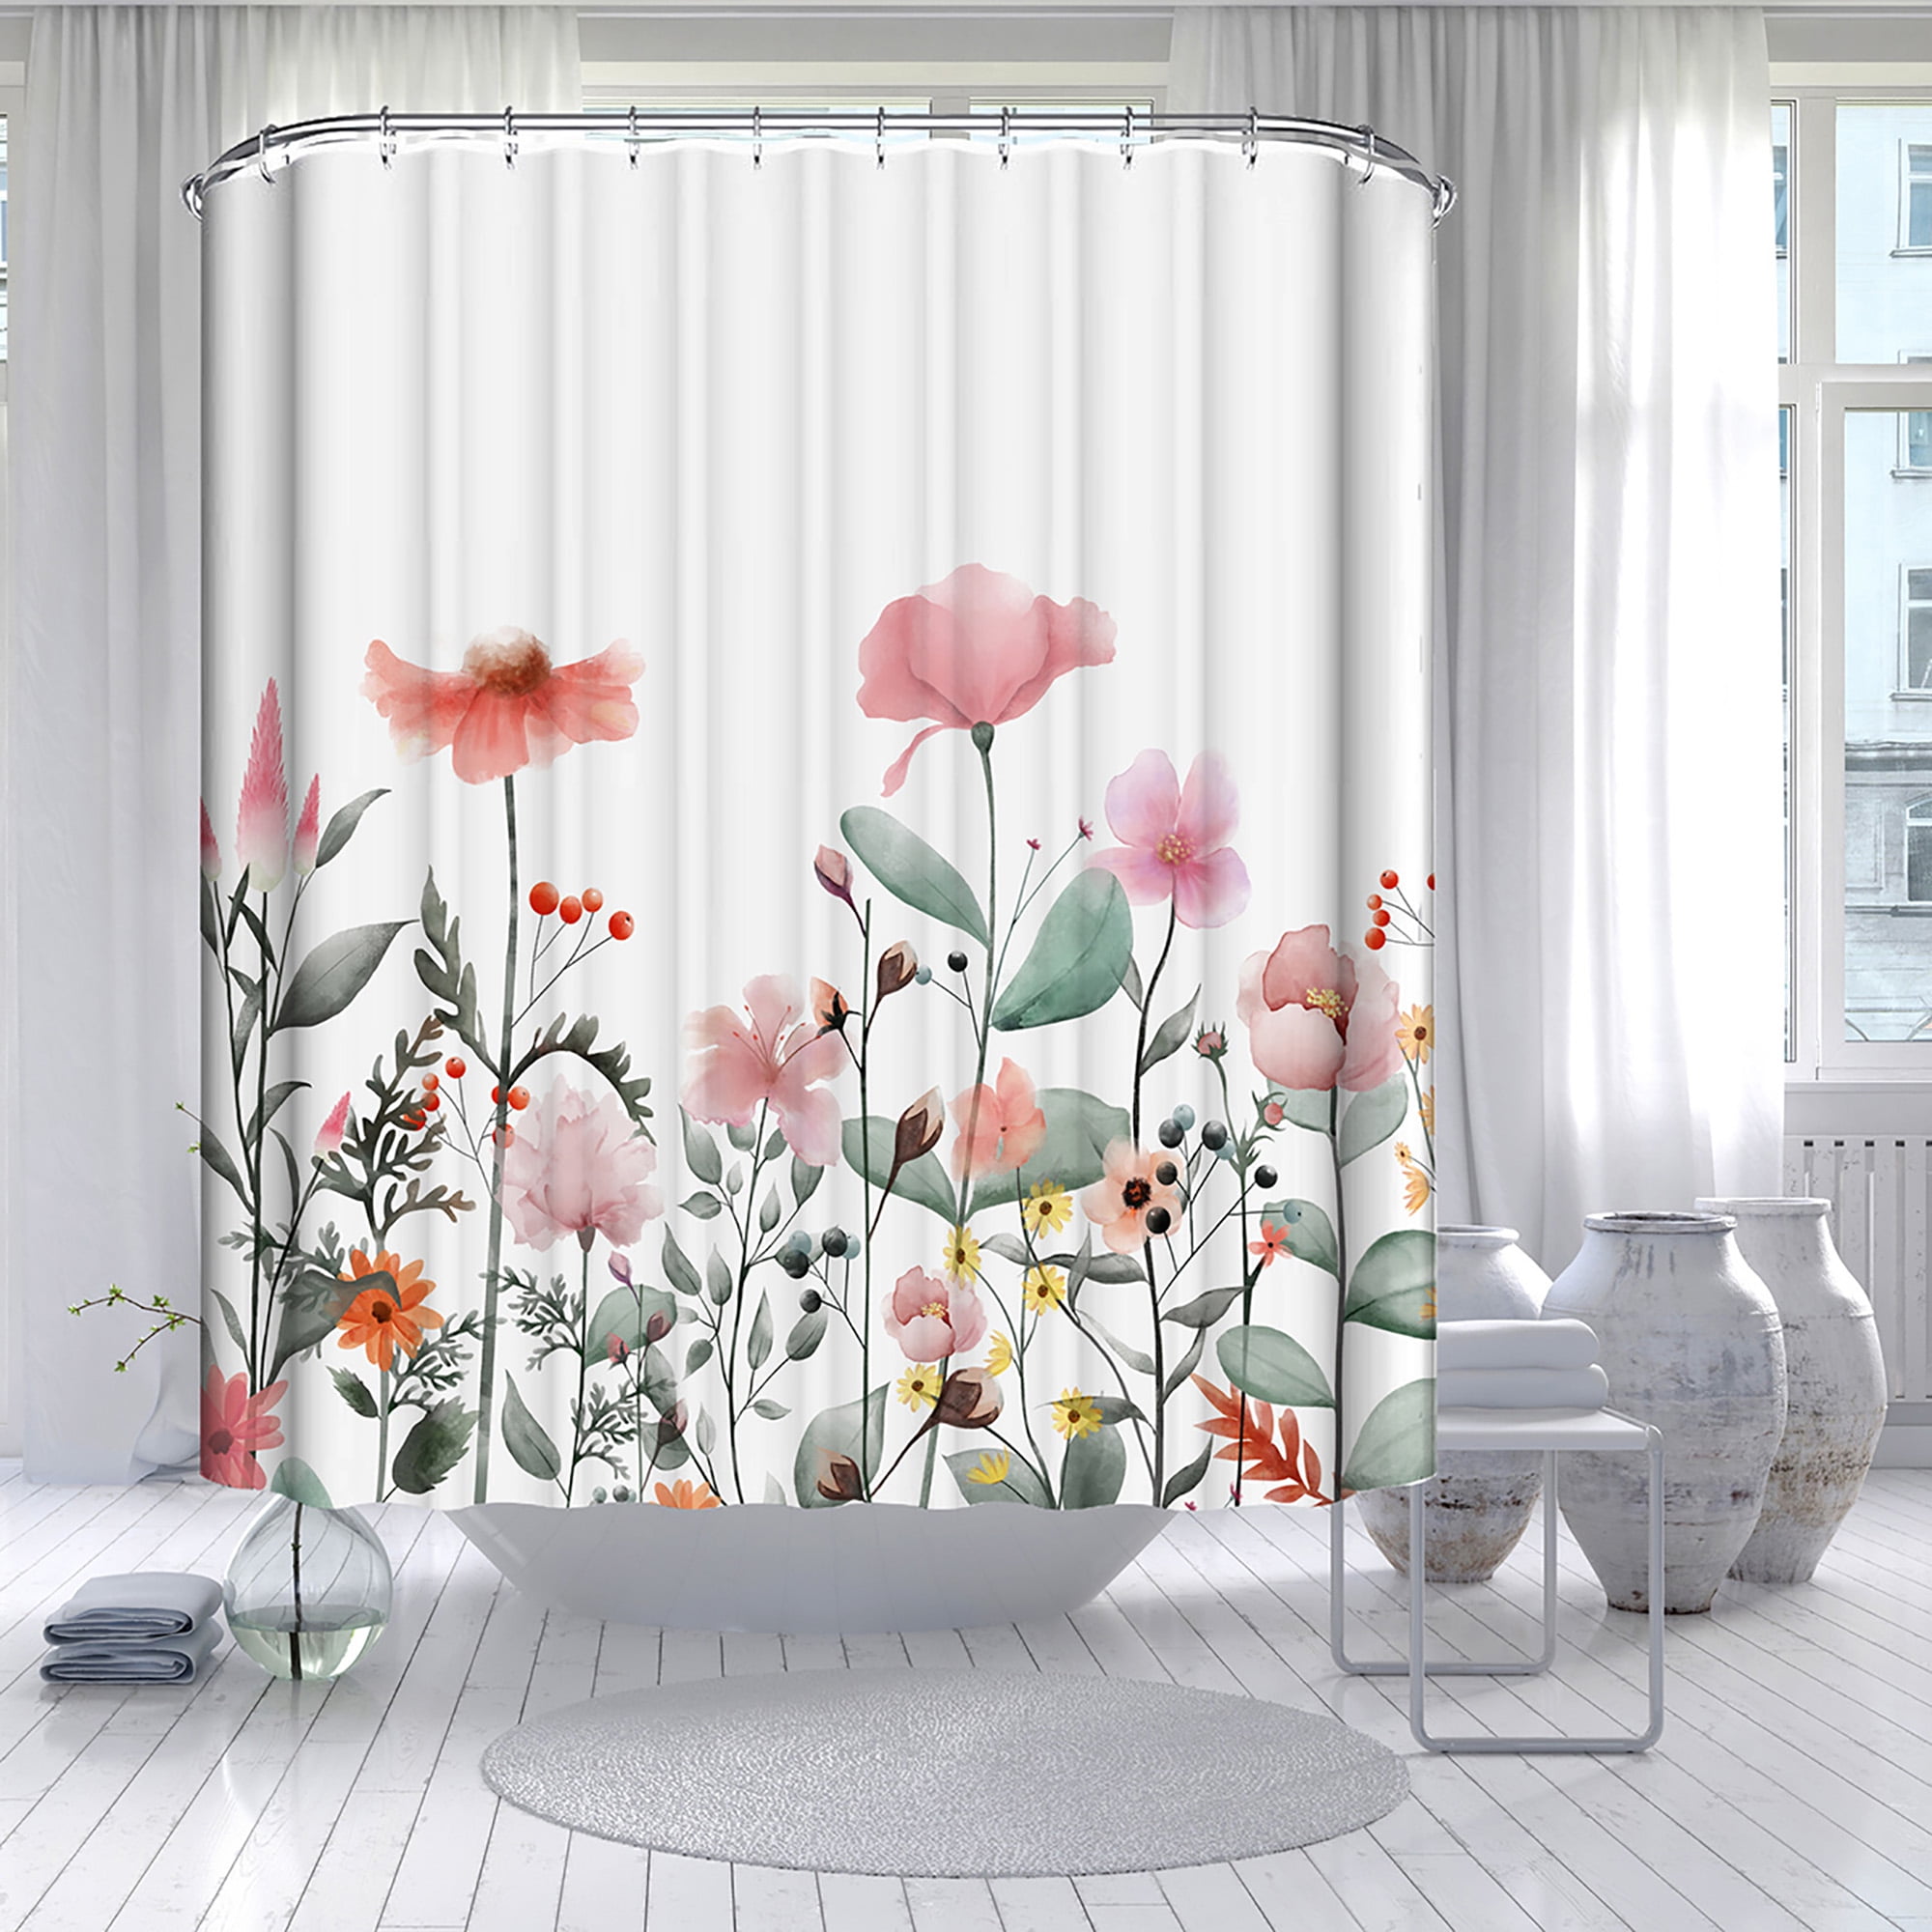 Tropical Flamingo Shower Curtain Bedroom Waterproof Fabric & 12hooks 180*180CM 